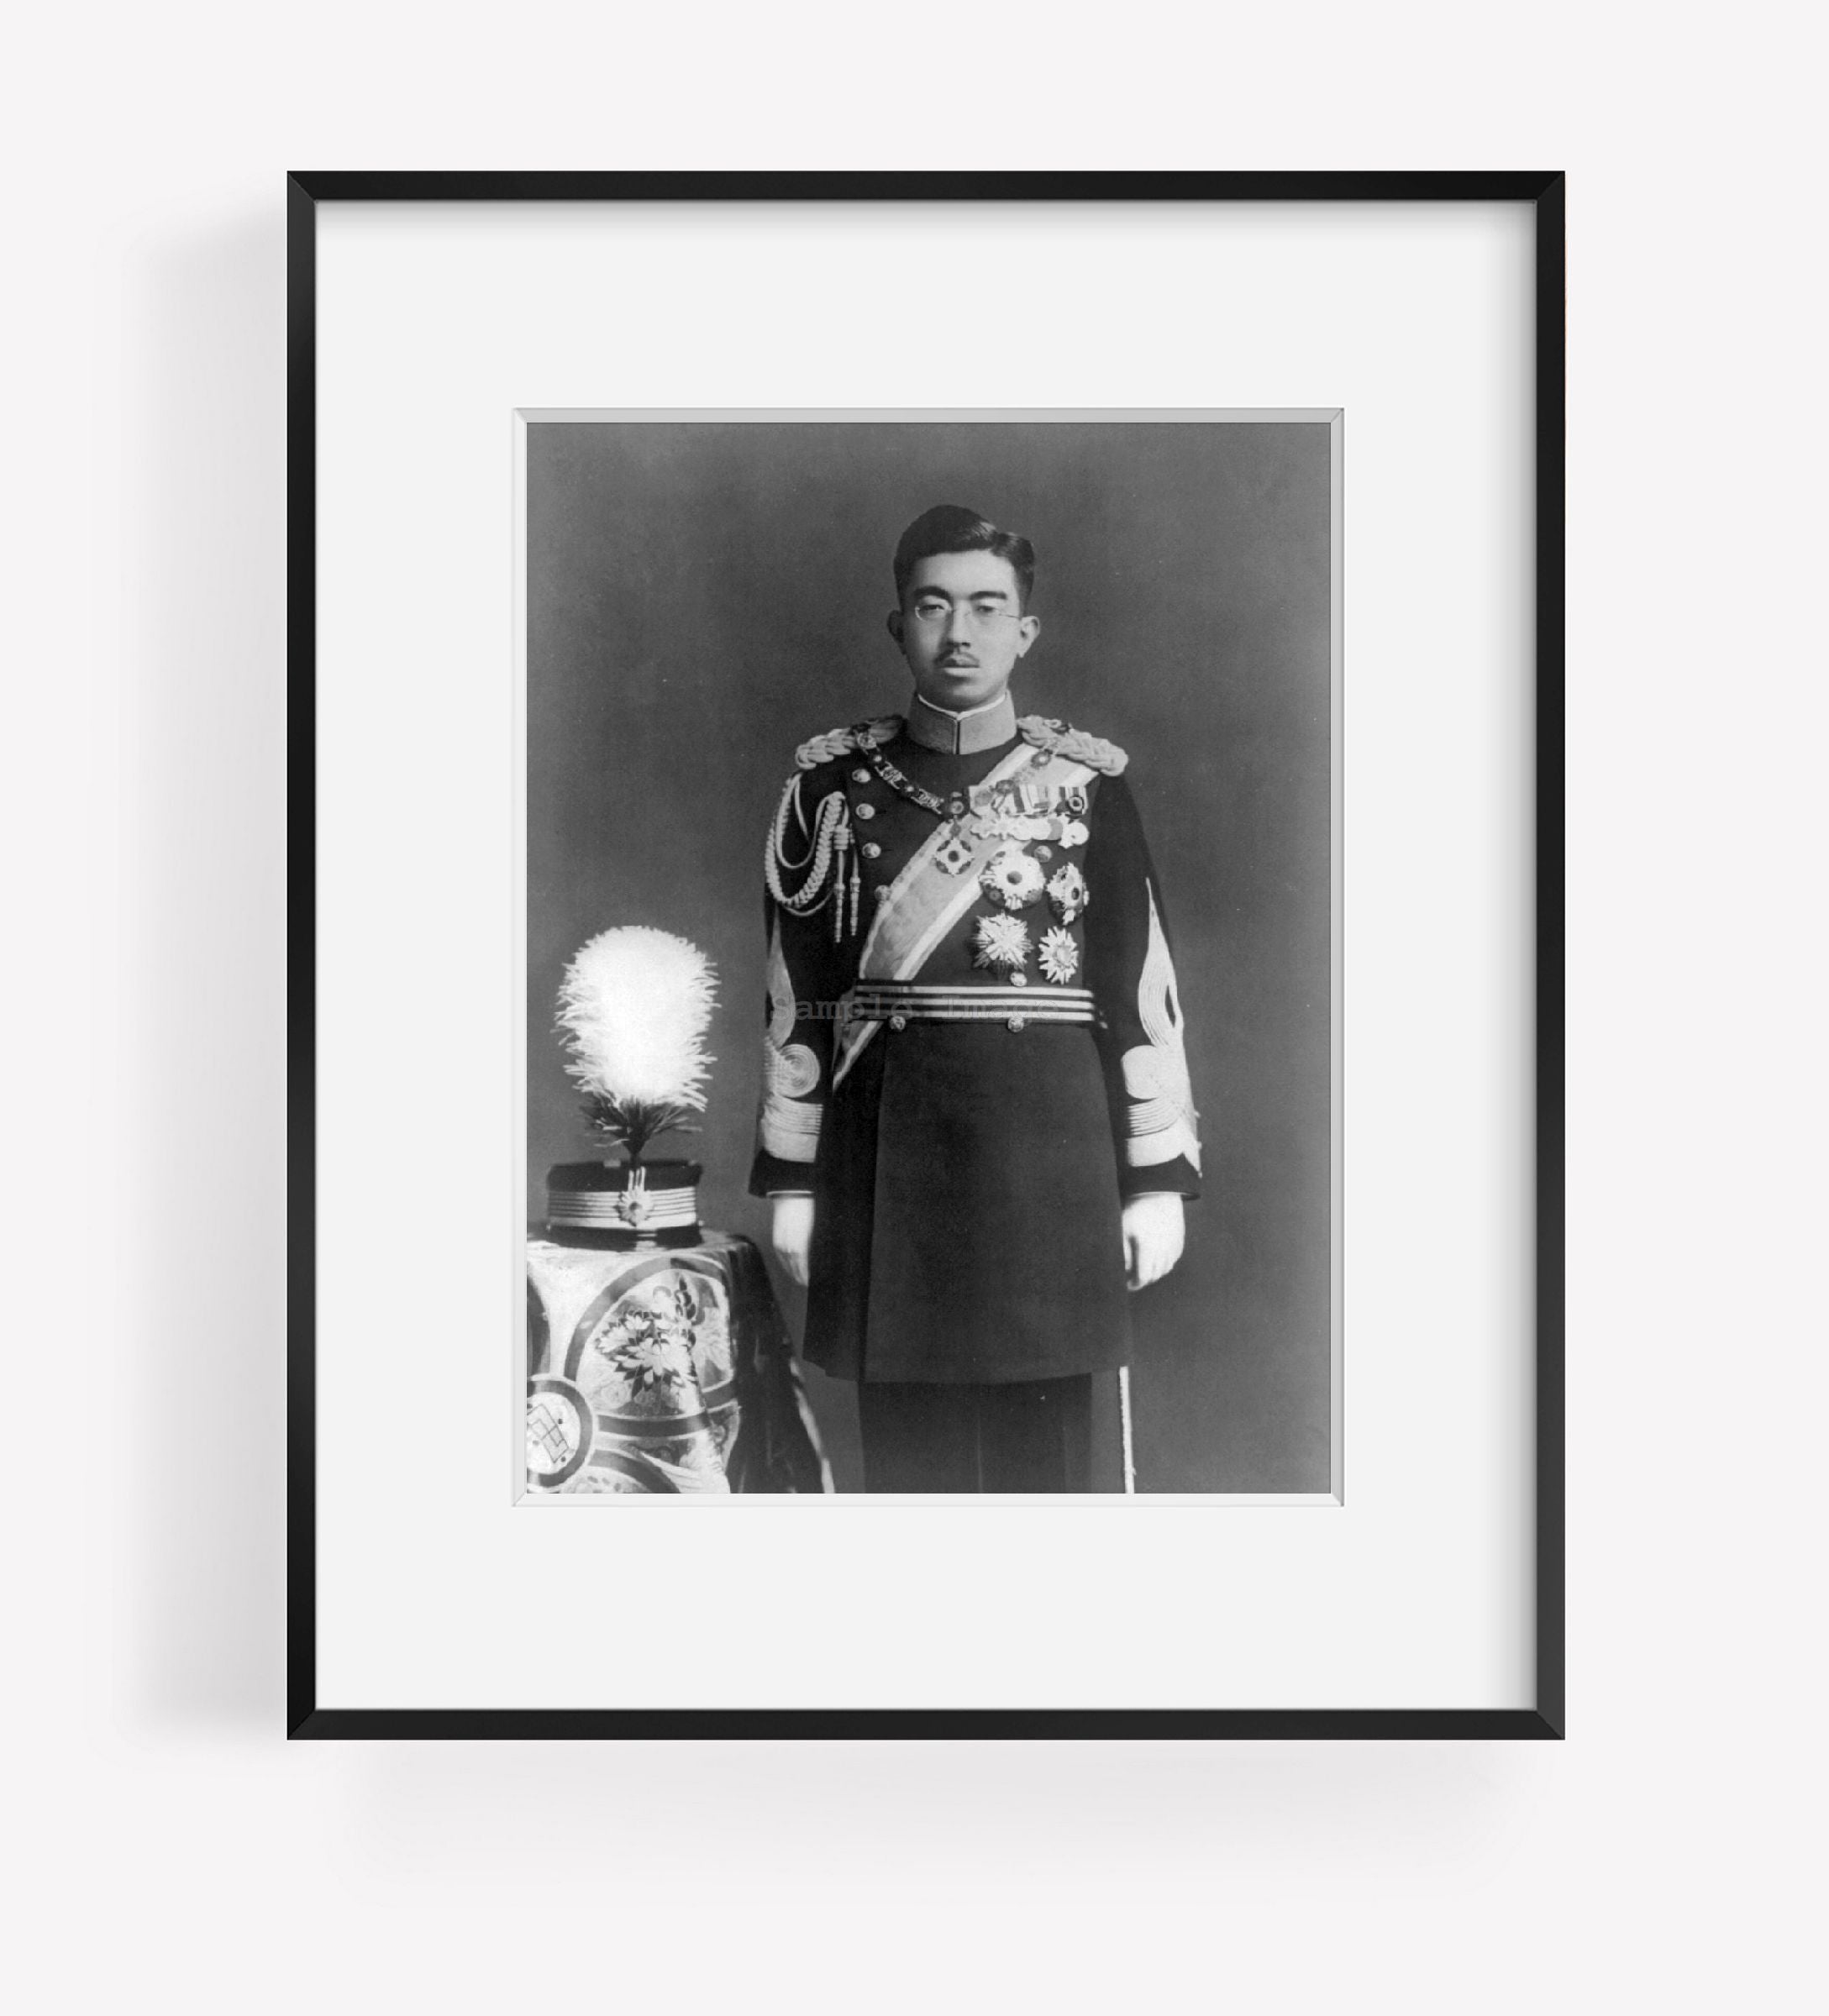 1935 photograph of Hirohito - in dress uniform